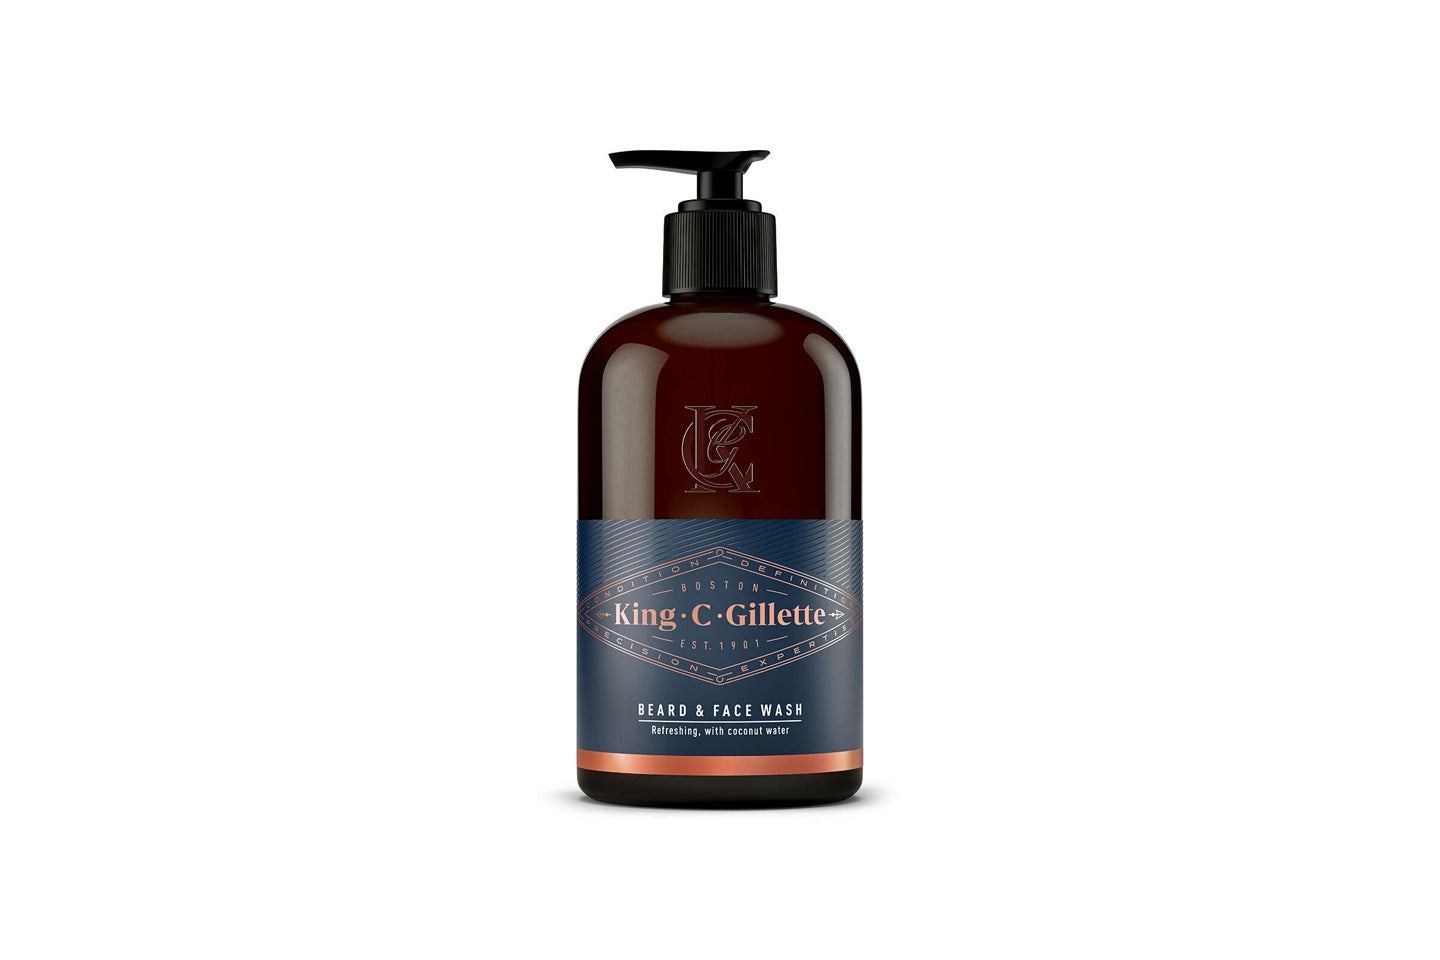 King C. Gillette Men's Beard and Face Wash